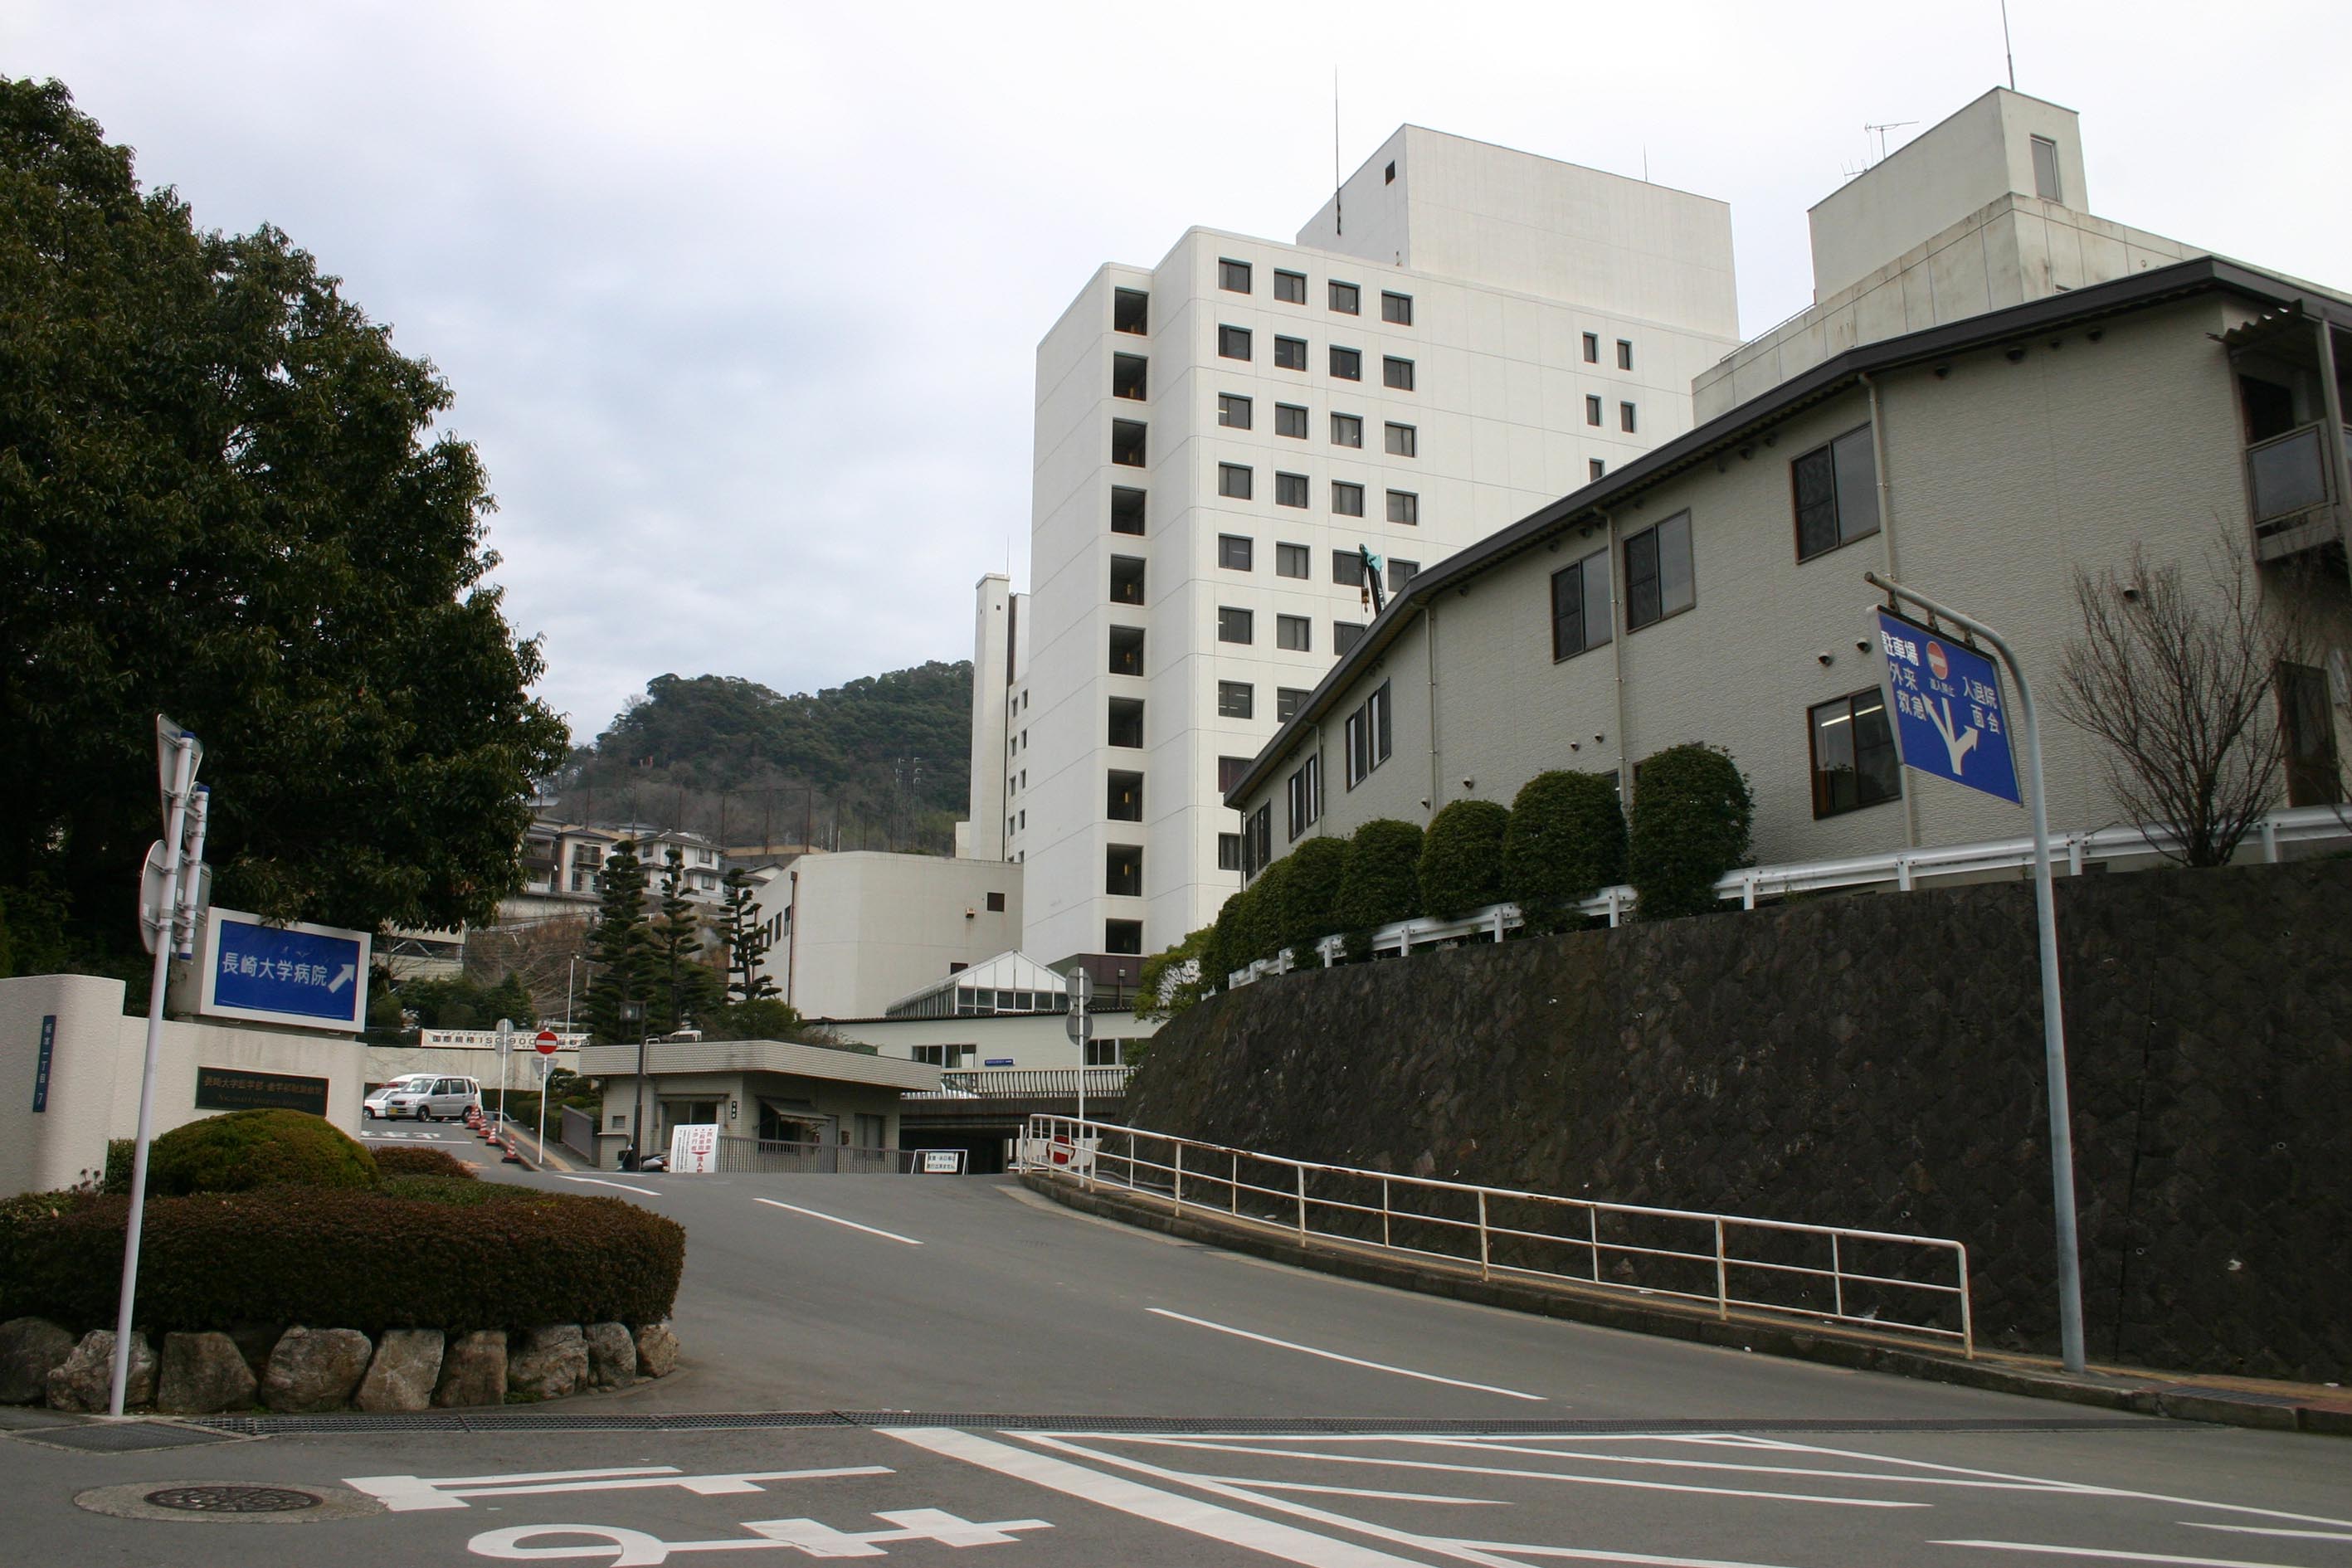 Hospital. 760m to Nagasaki University Hospital (Hospital)